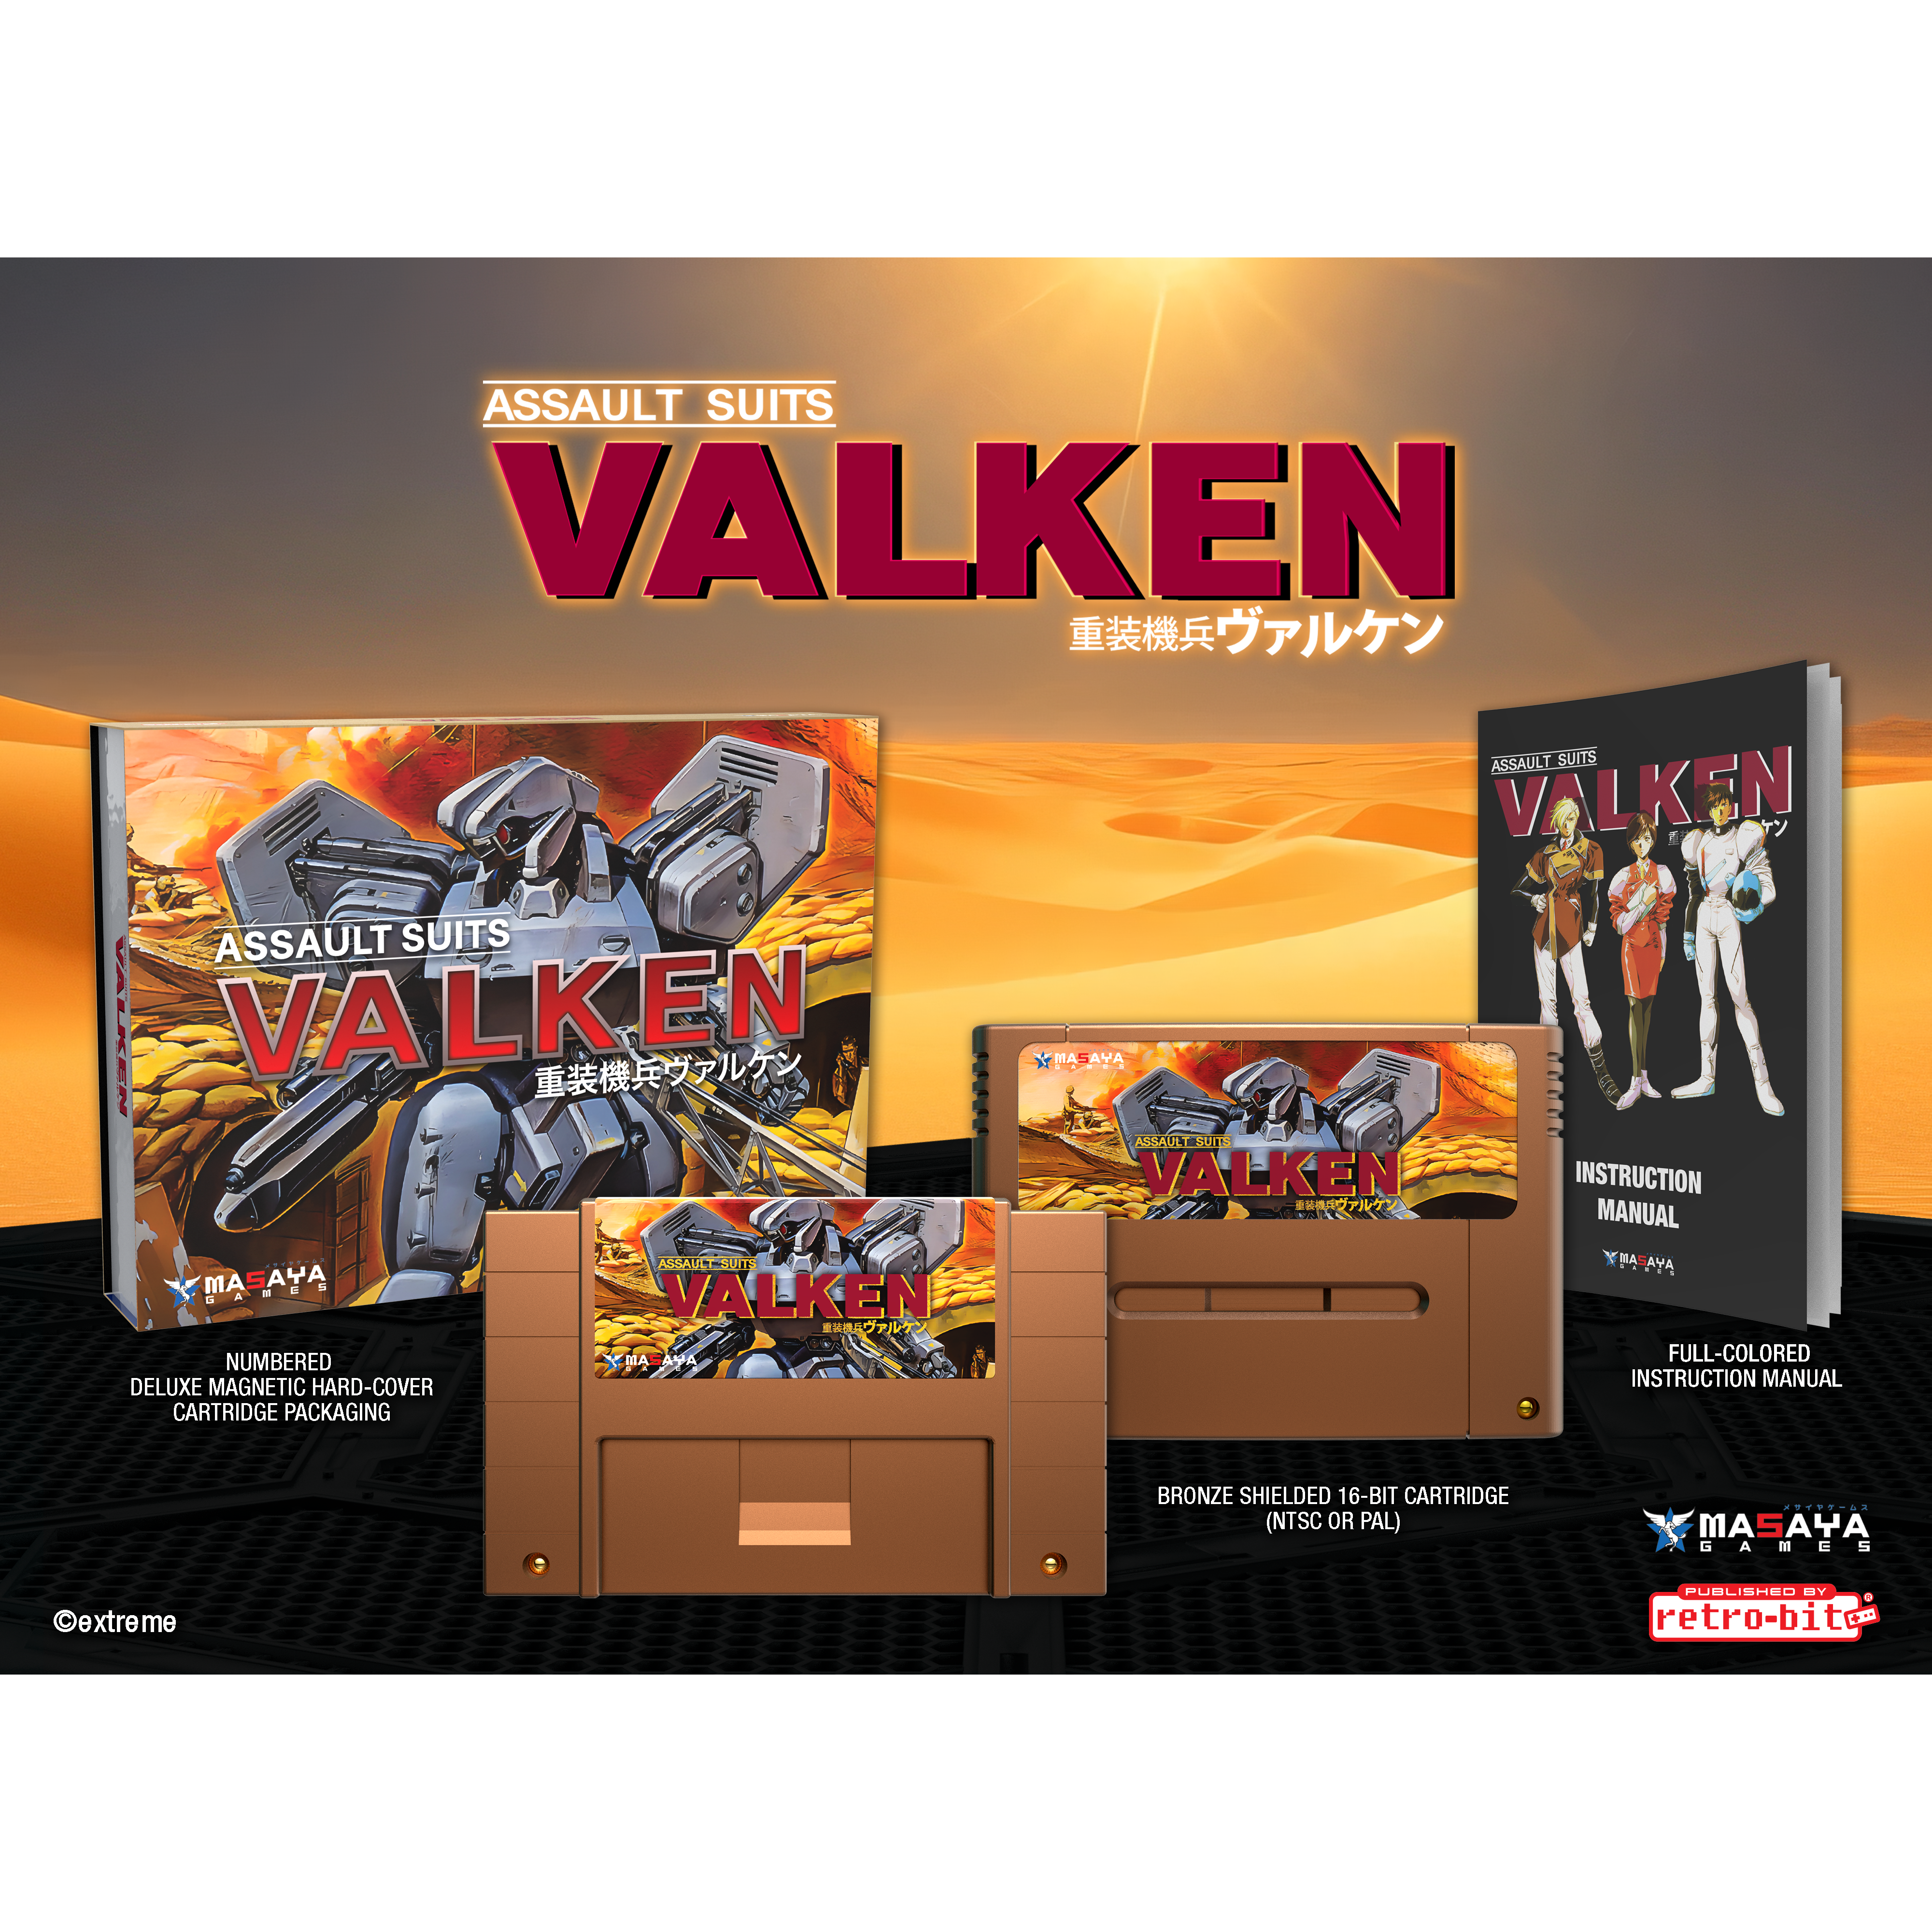 Assault Suits Valken: Collectors & Deluxe Edition Sets